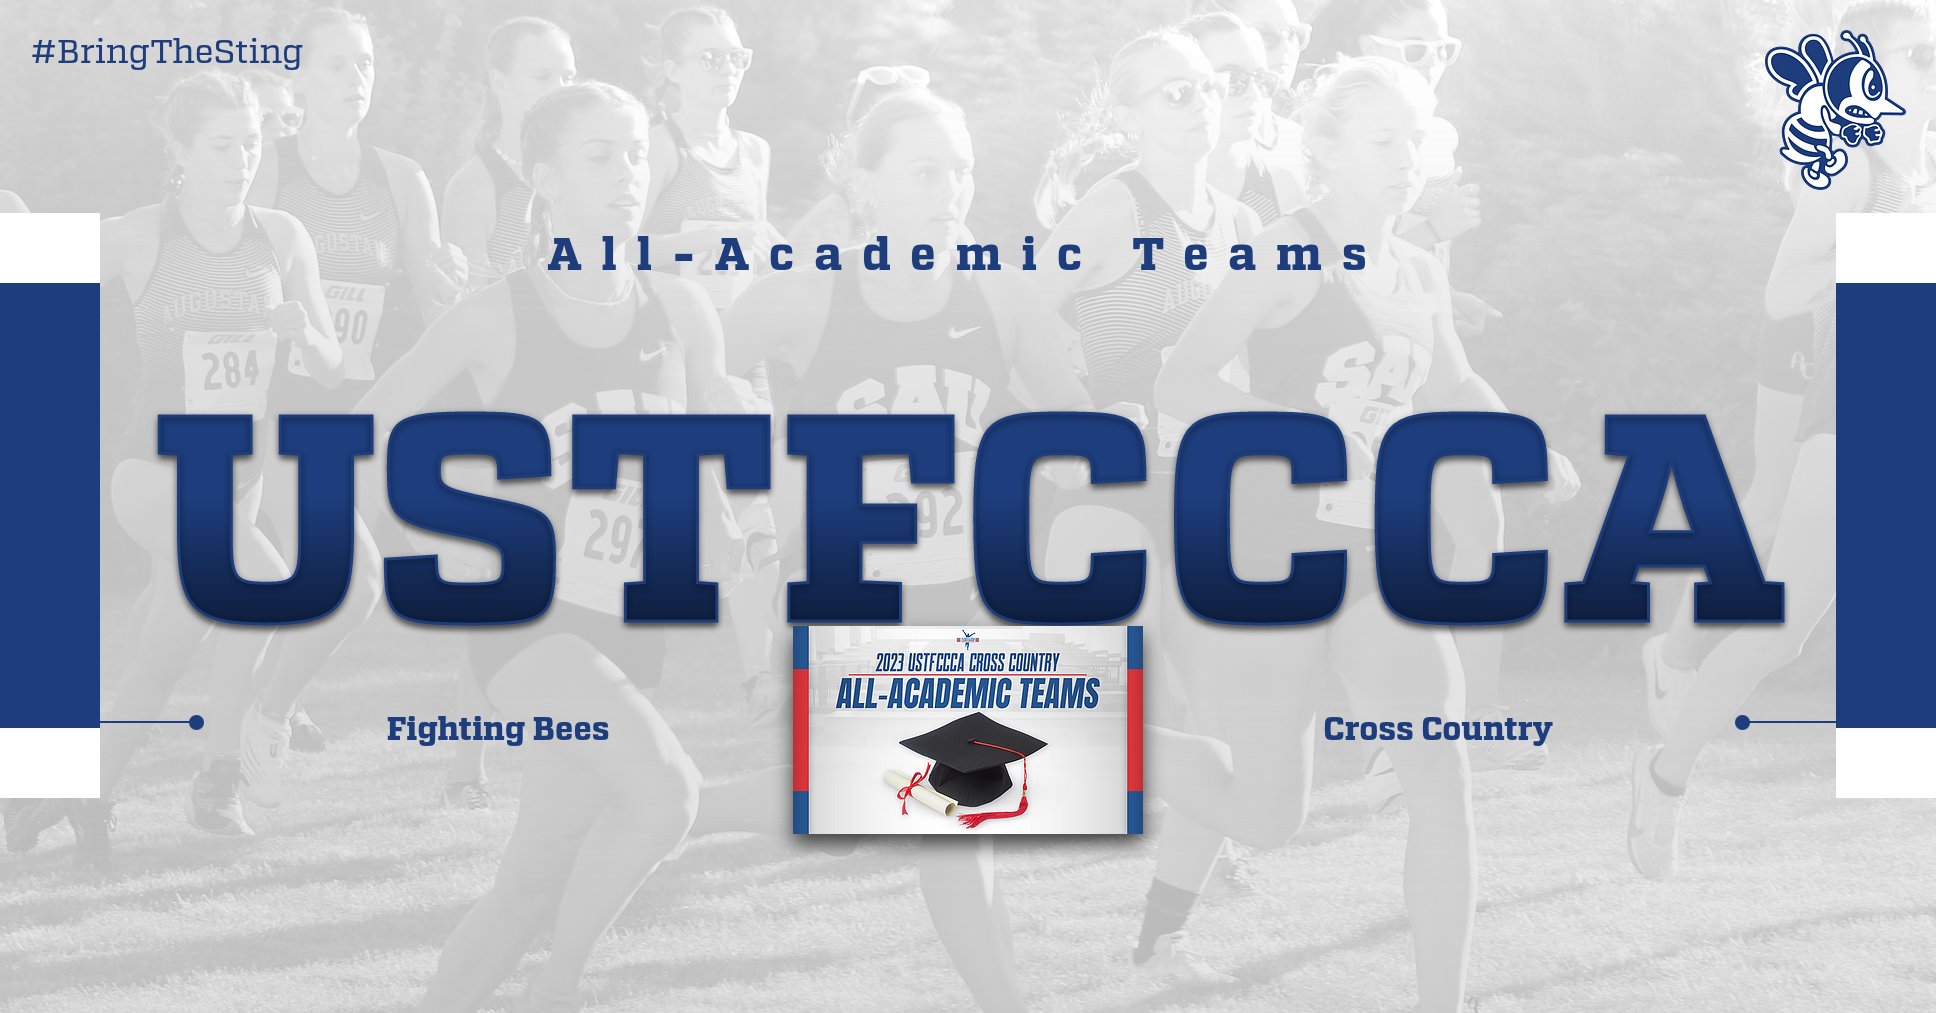 St. Ambrose named USTFCCCA All-Academic Team